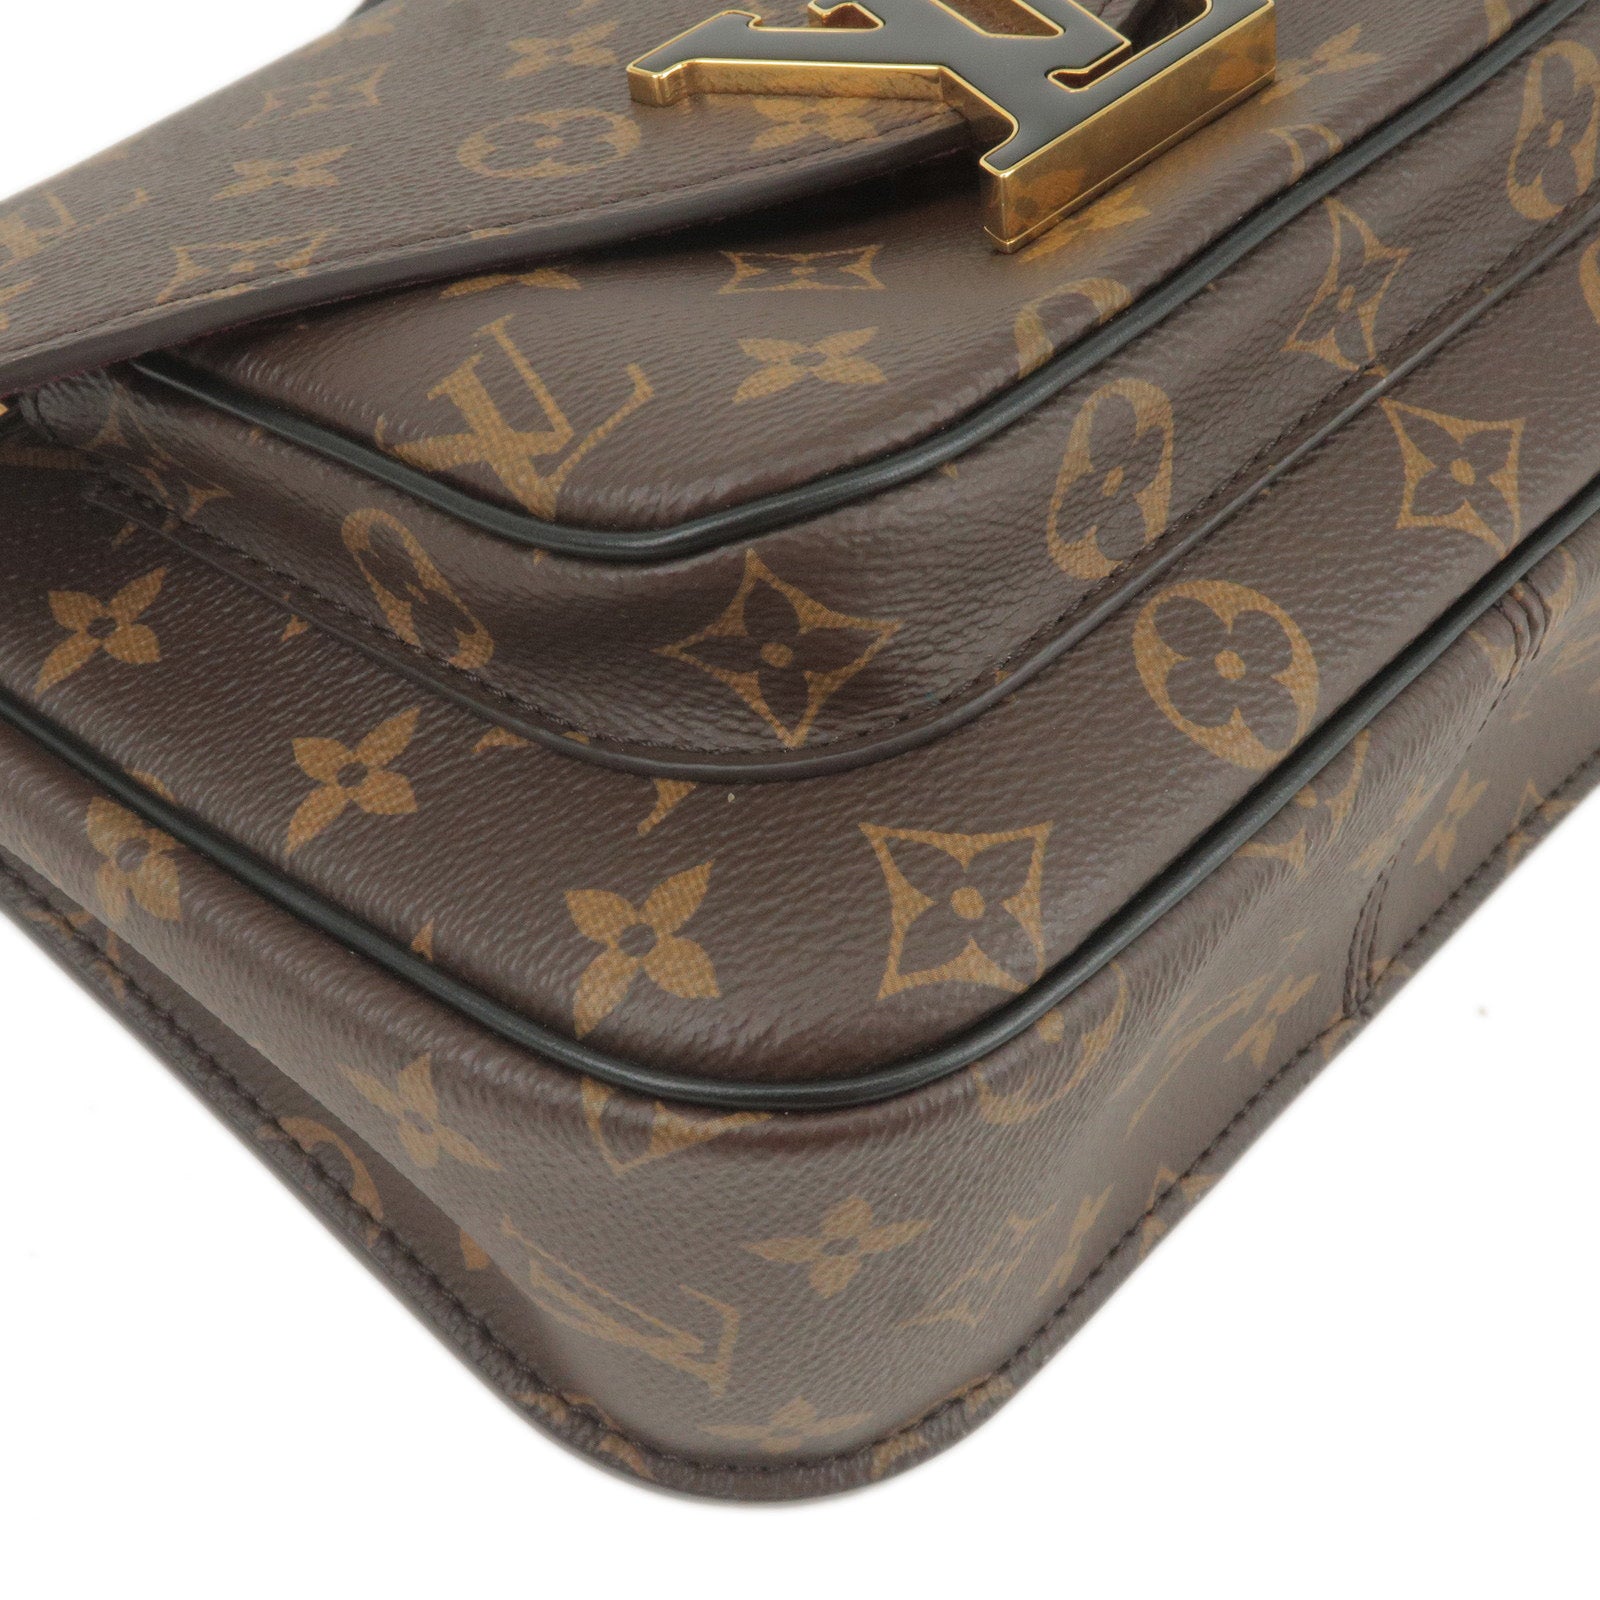 Passy Bag Monogram Canvas - Handbags M45592